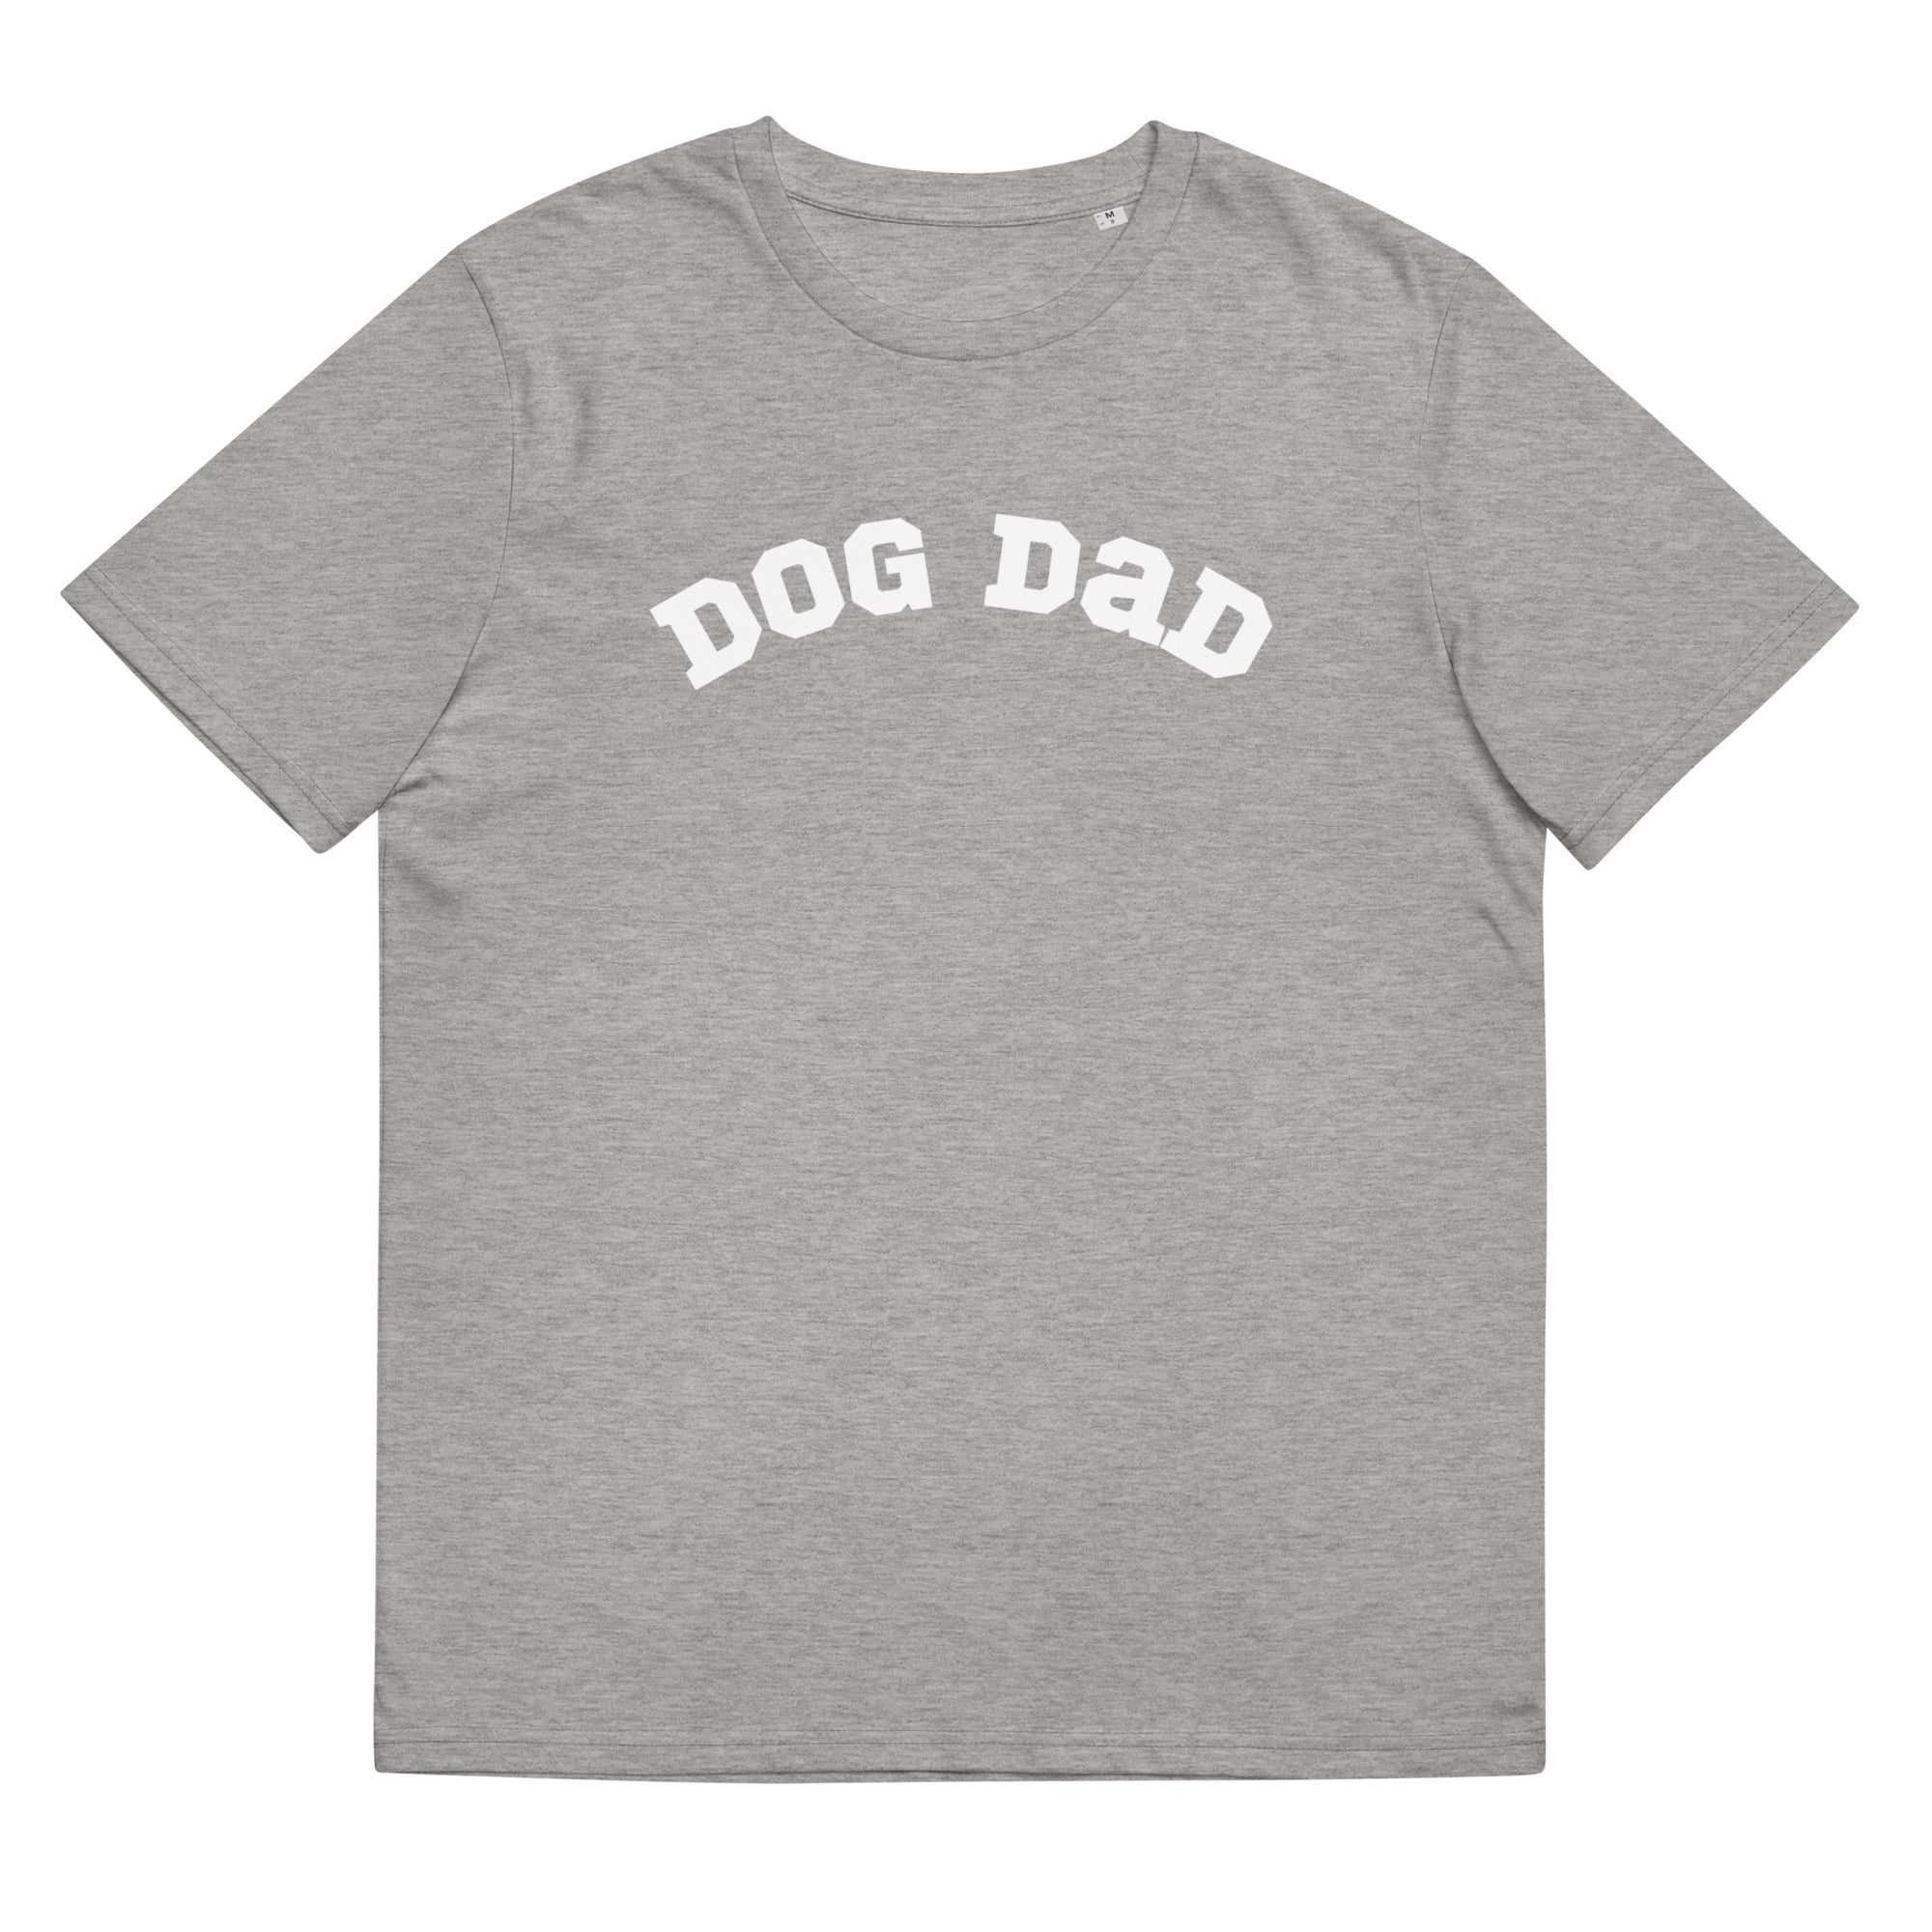 Dog Dad Organic Cotton T-shirt